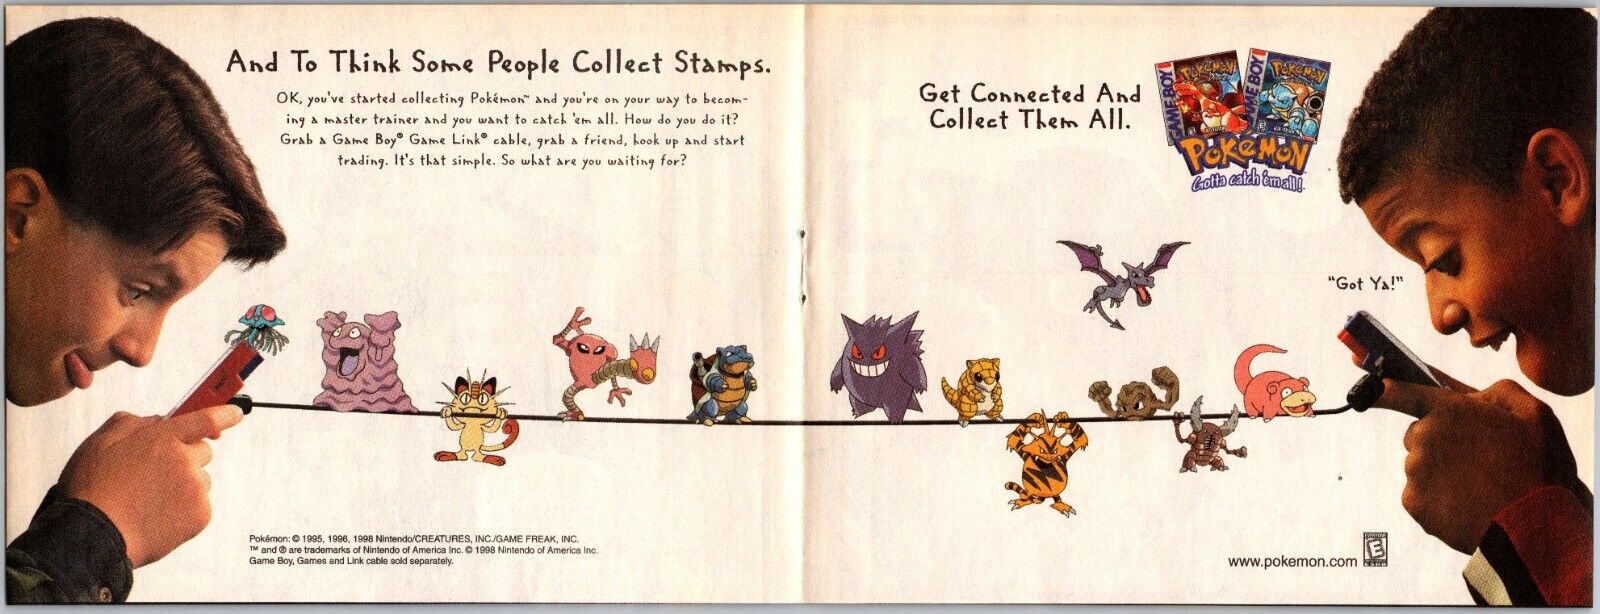 Pokemon Red Blue Print Ad Game Poster Art PROMO Original Nintendo Boy GB Gengar